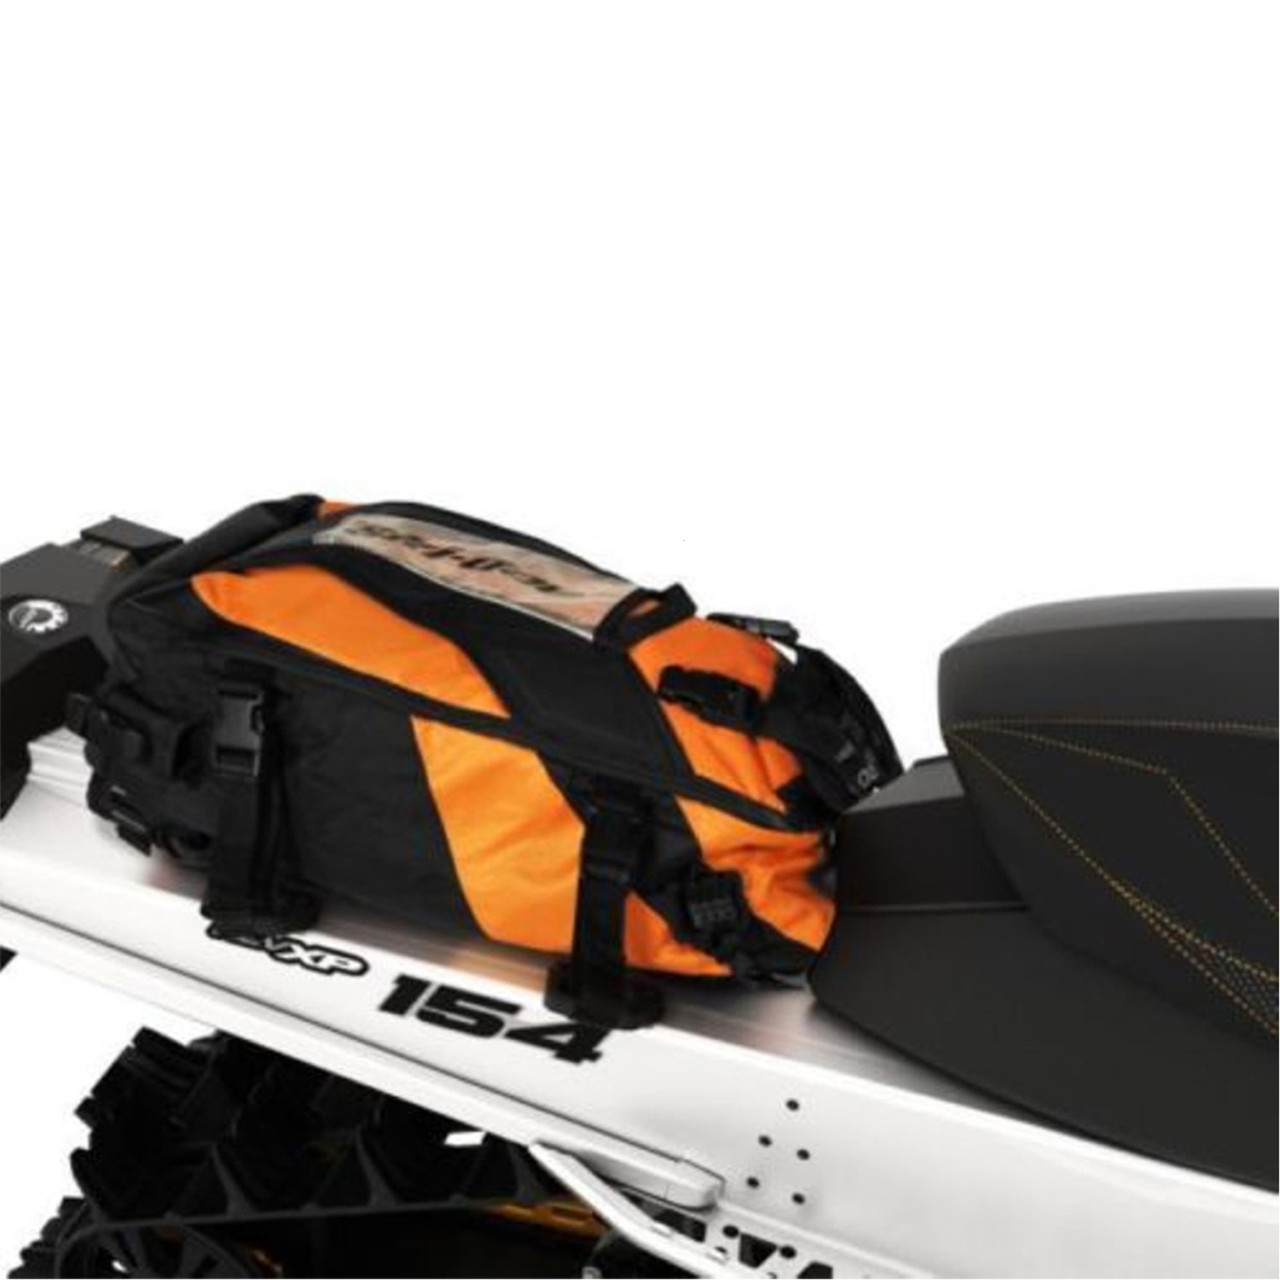 Ski-Doo New OEM Branded 28 Liter Tunnel Backpack With LinQ Soft Strap, 860200940